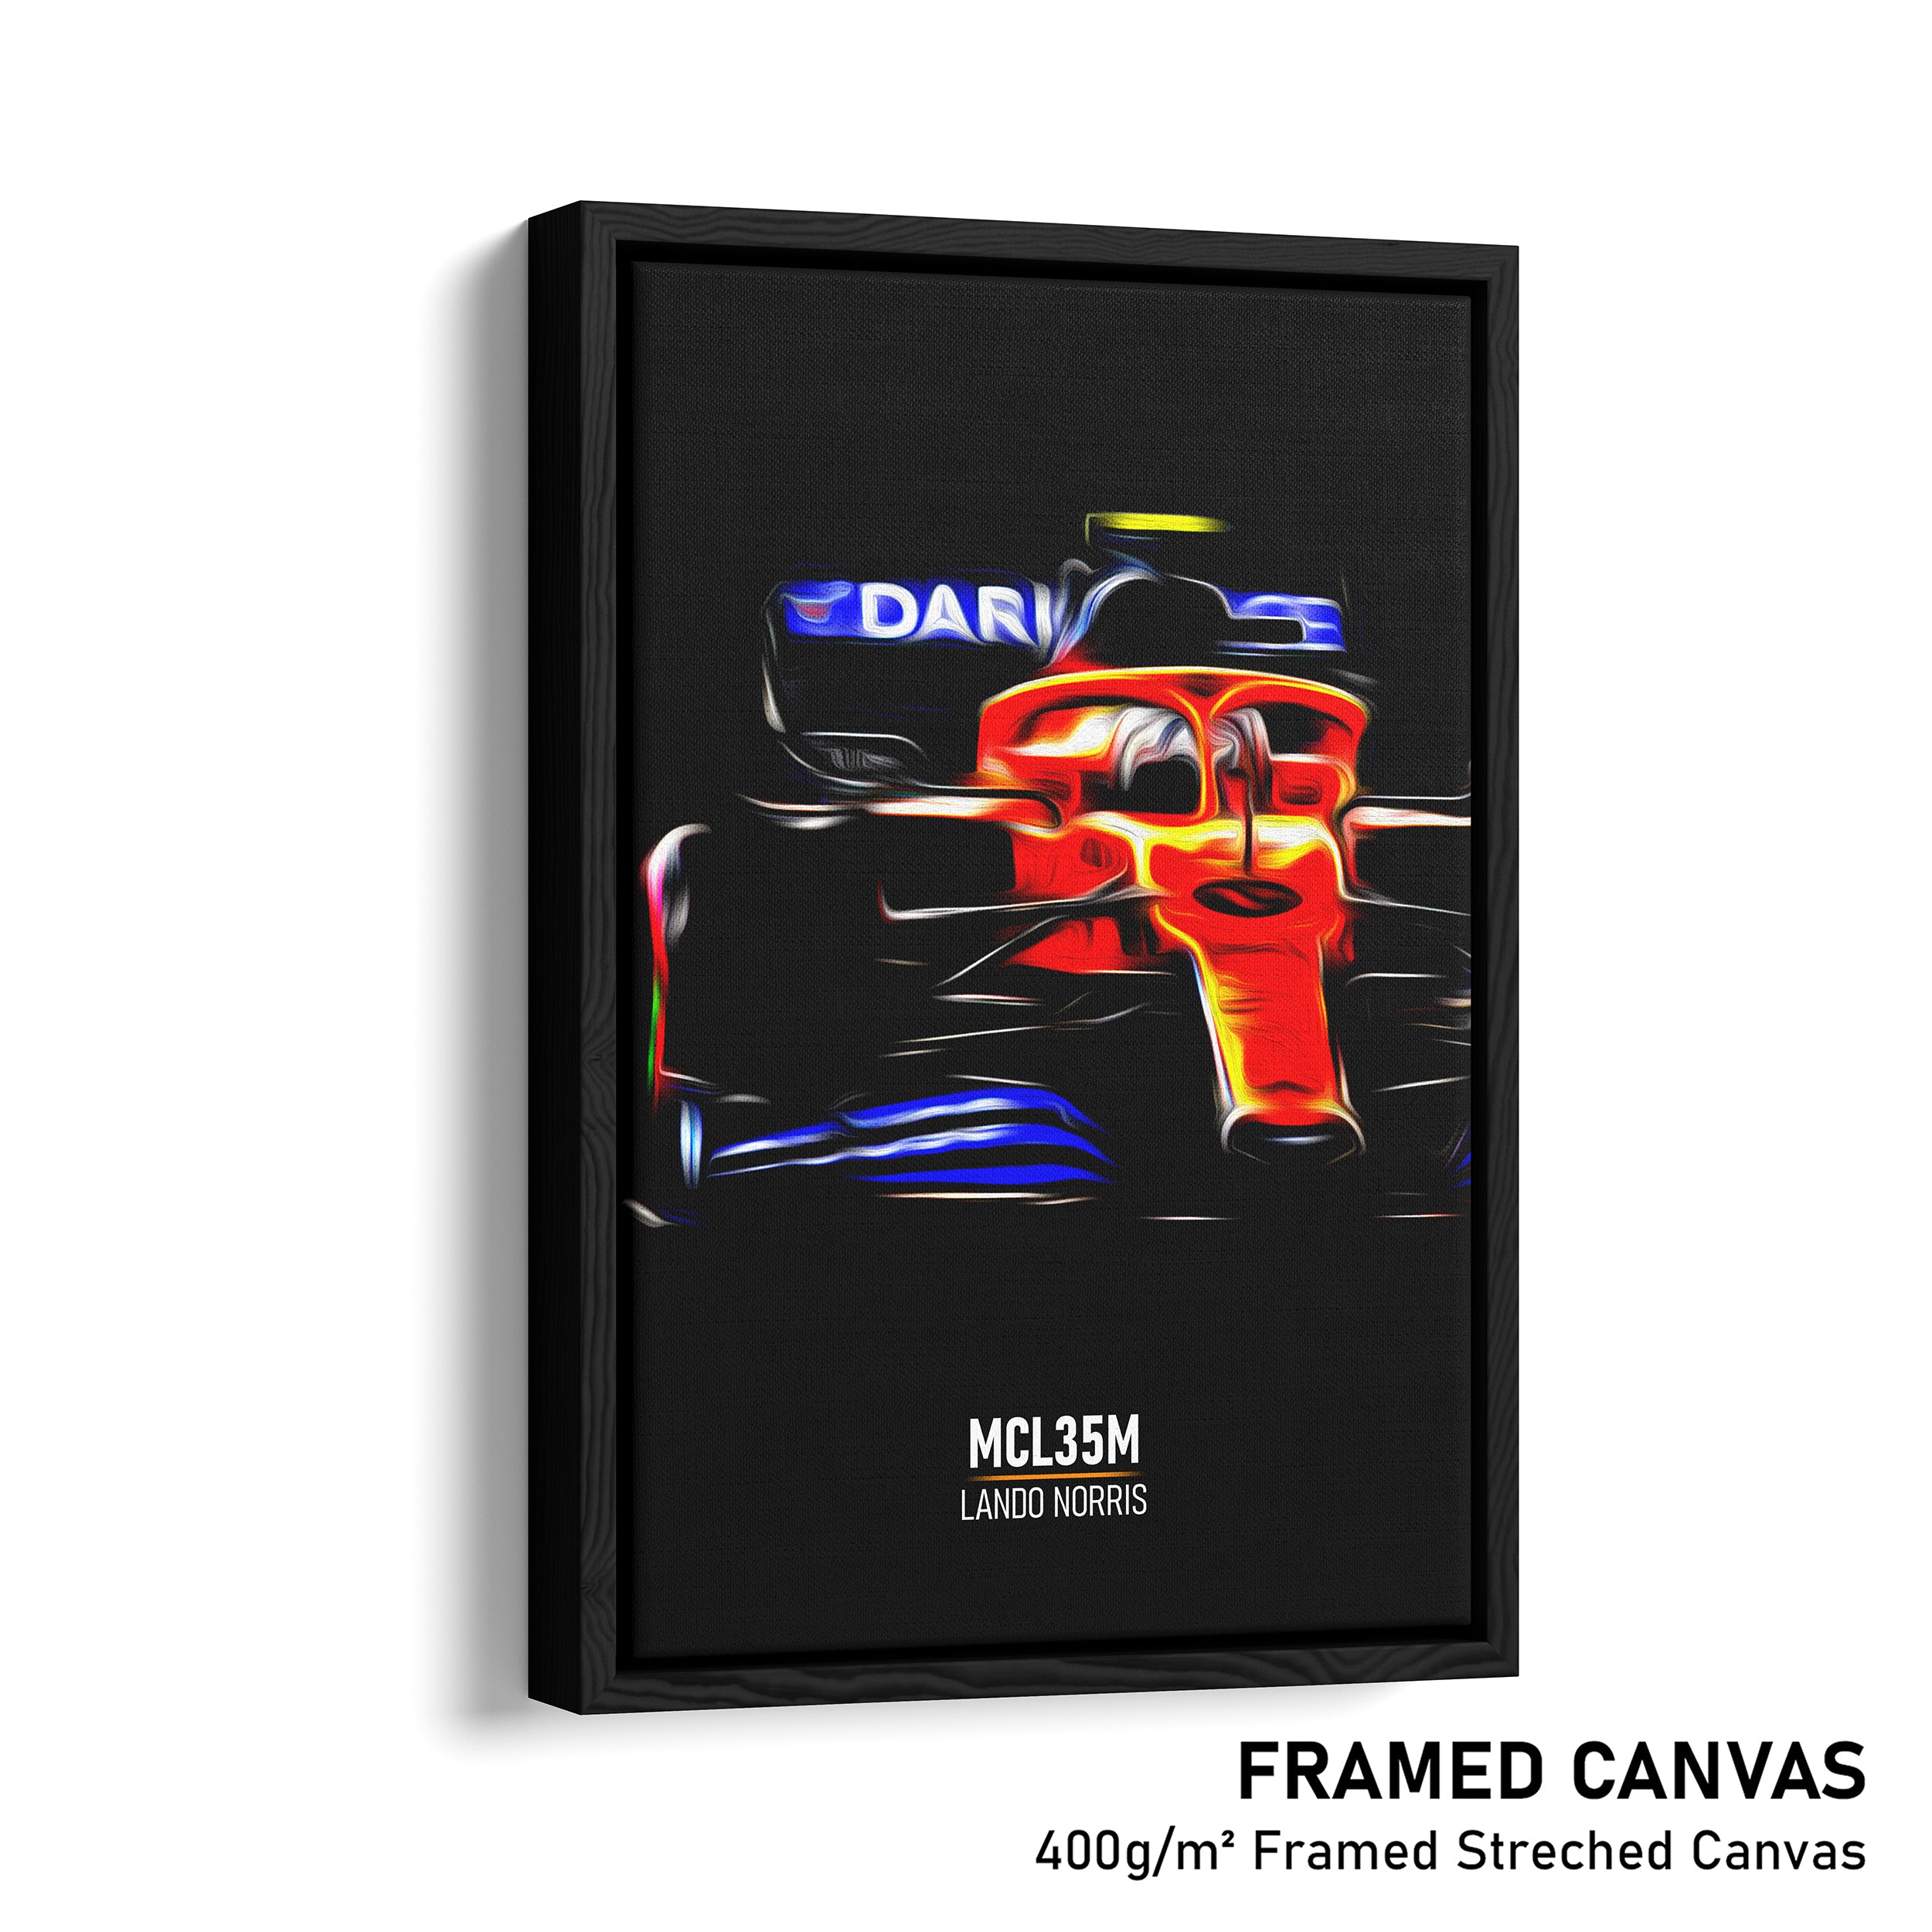 McLaren MCL35M, Lando Norris 2021 - Formula 1 Print